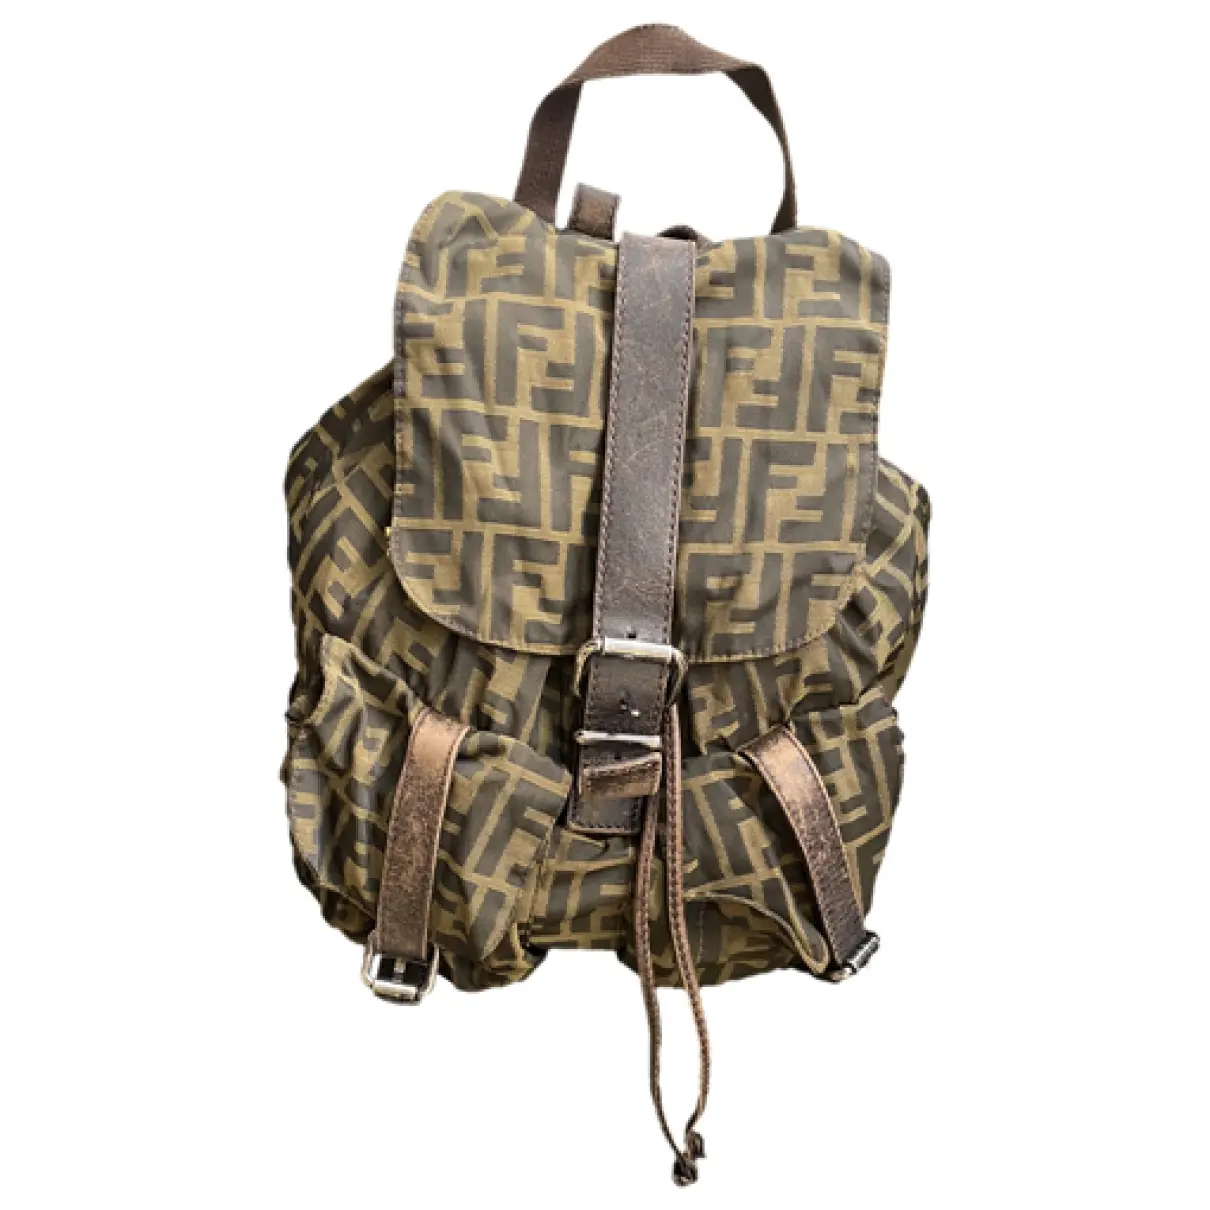 Baguette cloth backpack